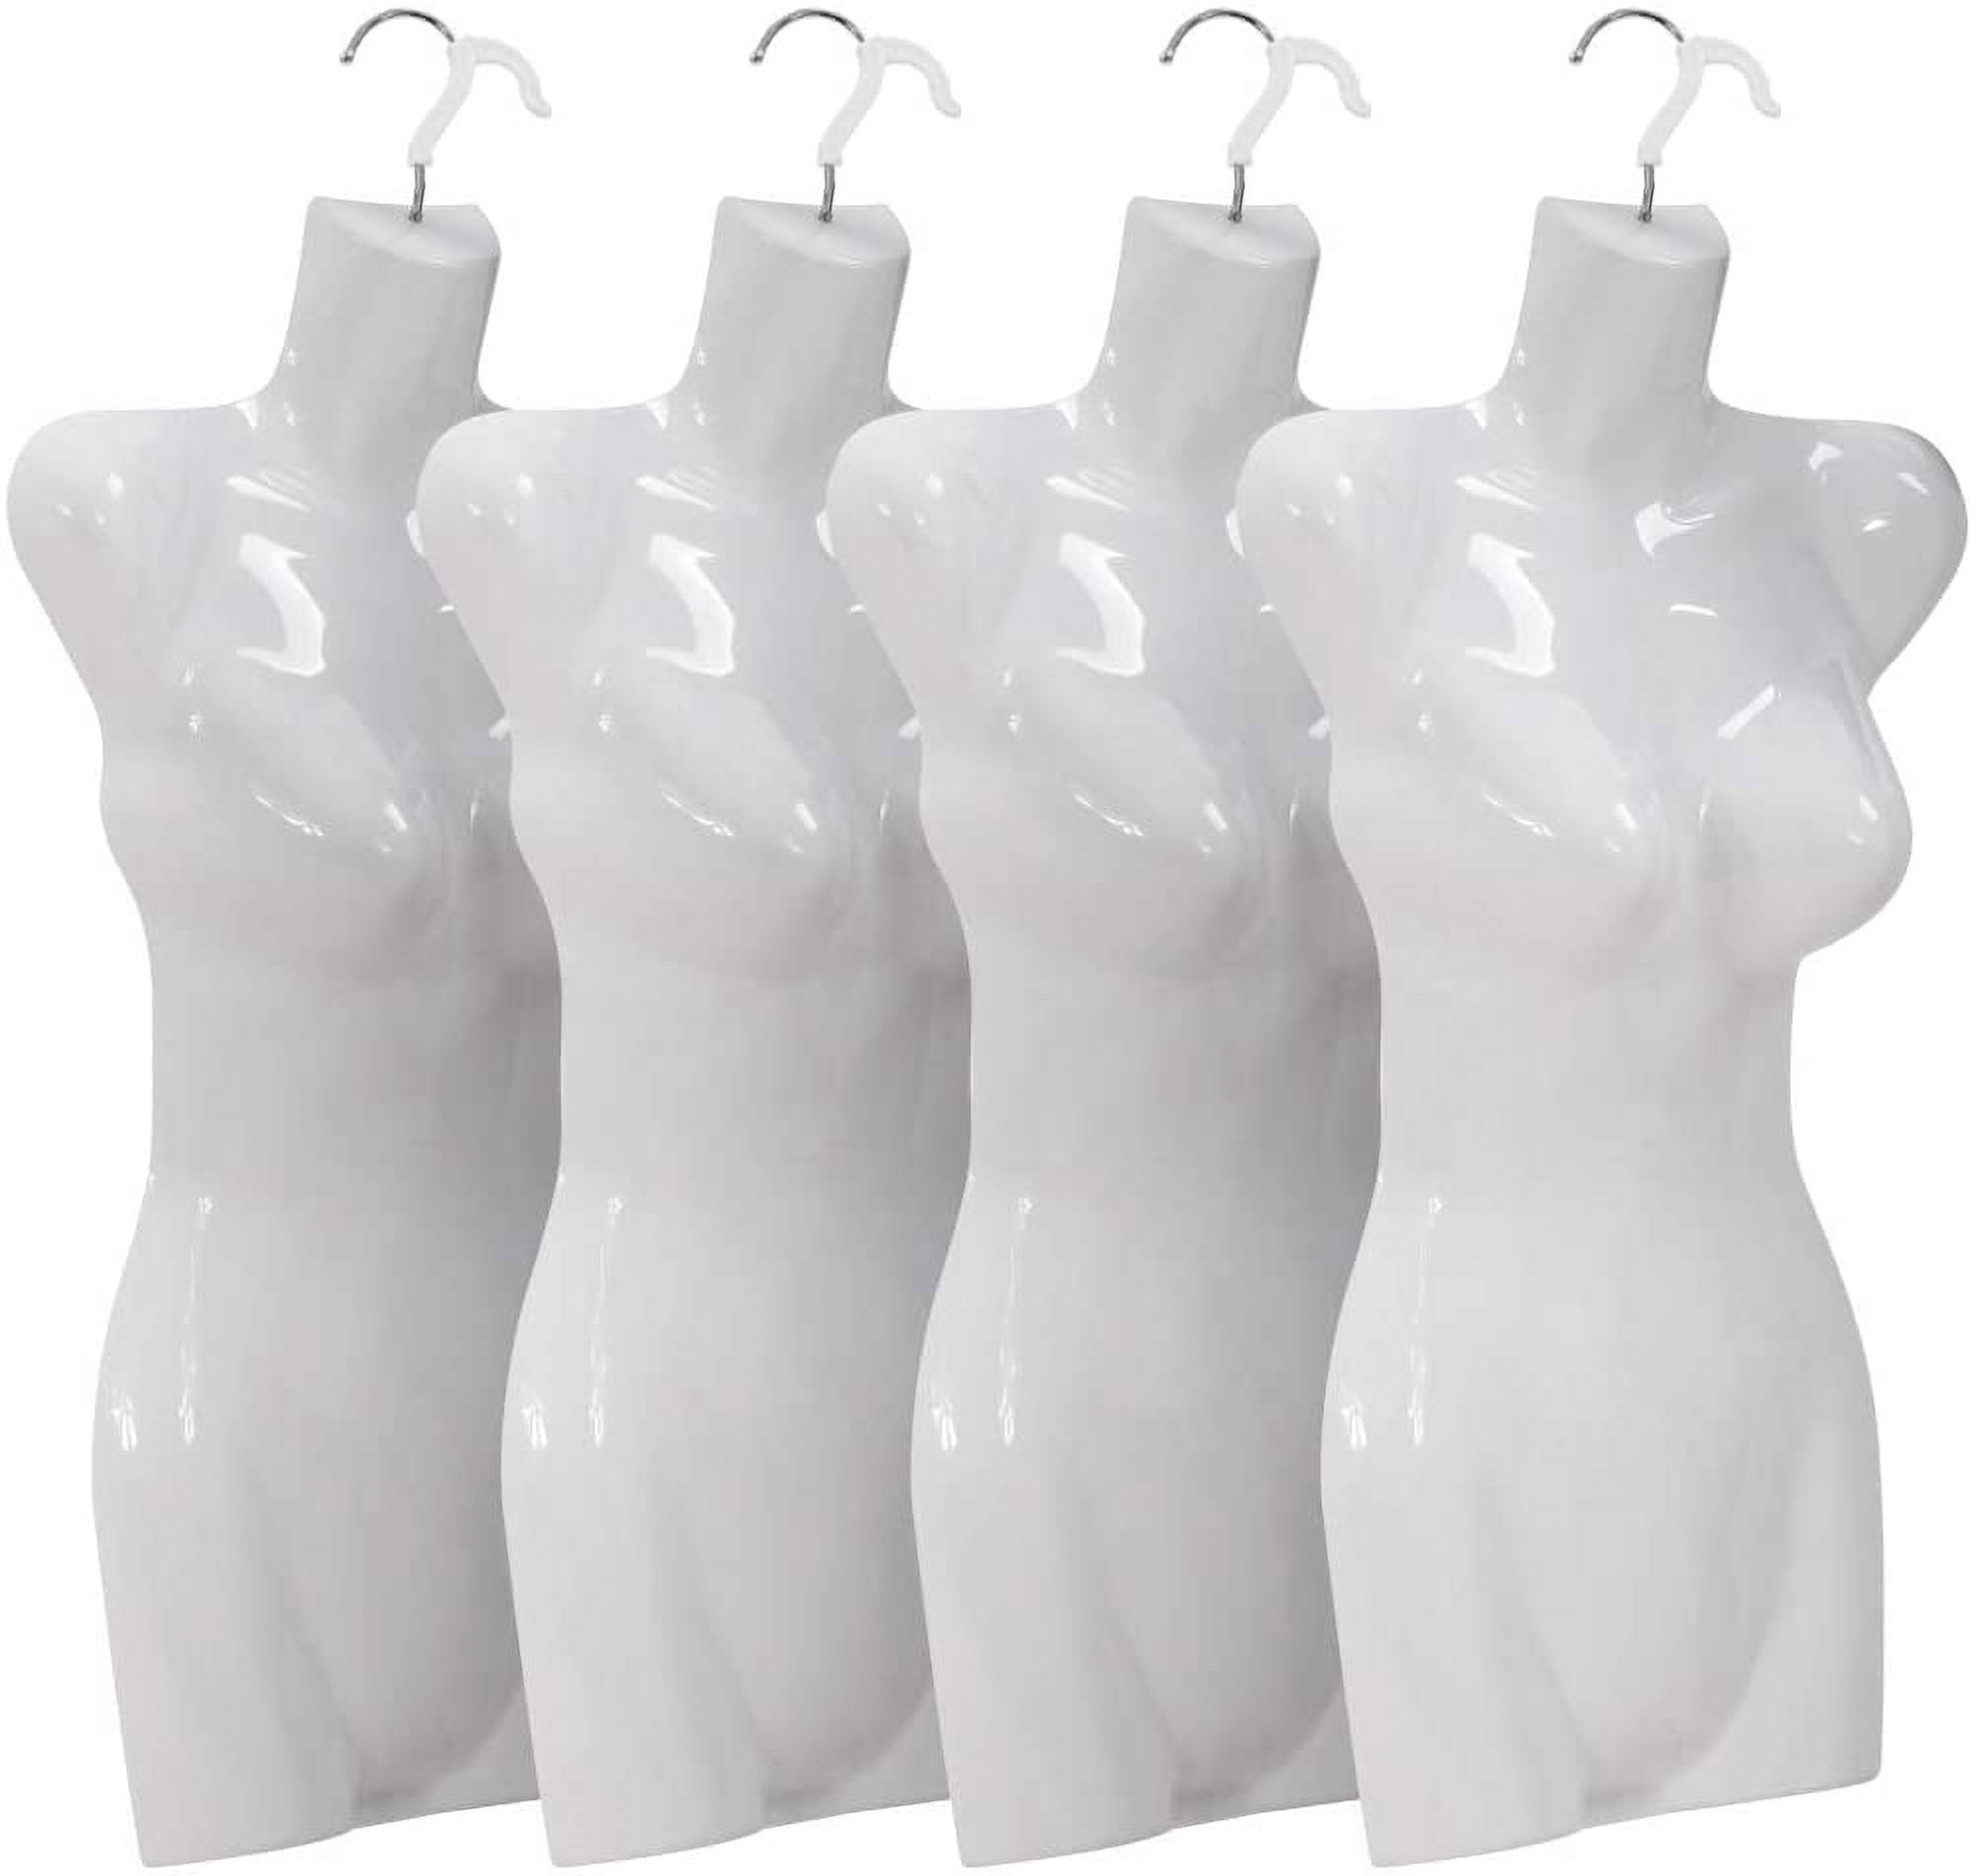 4PCS Female Mannequin Torso Dress Form Sewing Manikin 27 Inch Height Dress  Model Mannequin Display Head Dress Mannequin Clothing Form Metal Hook